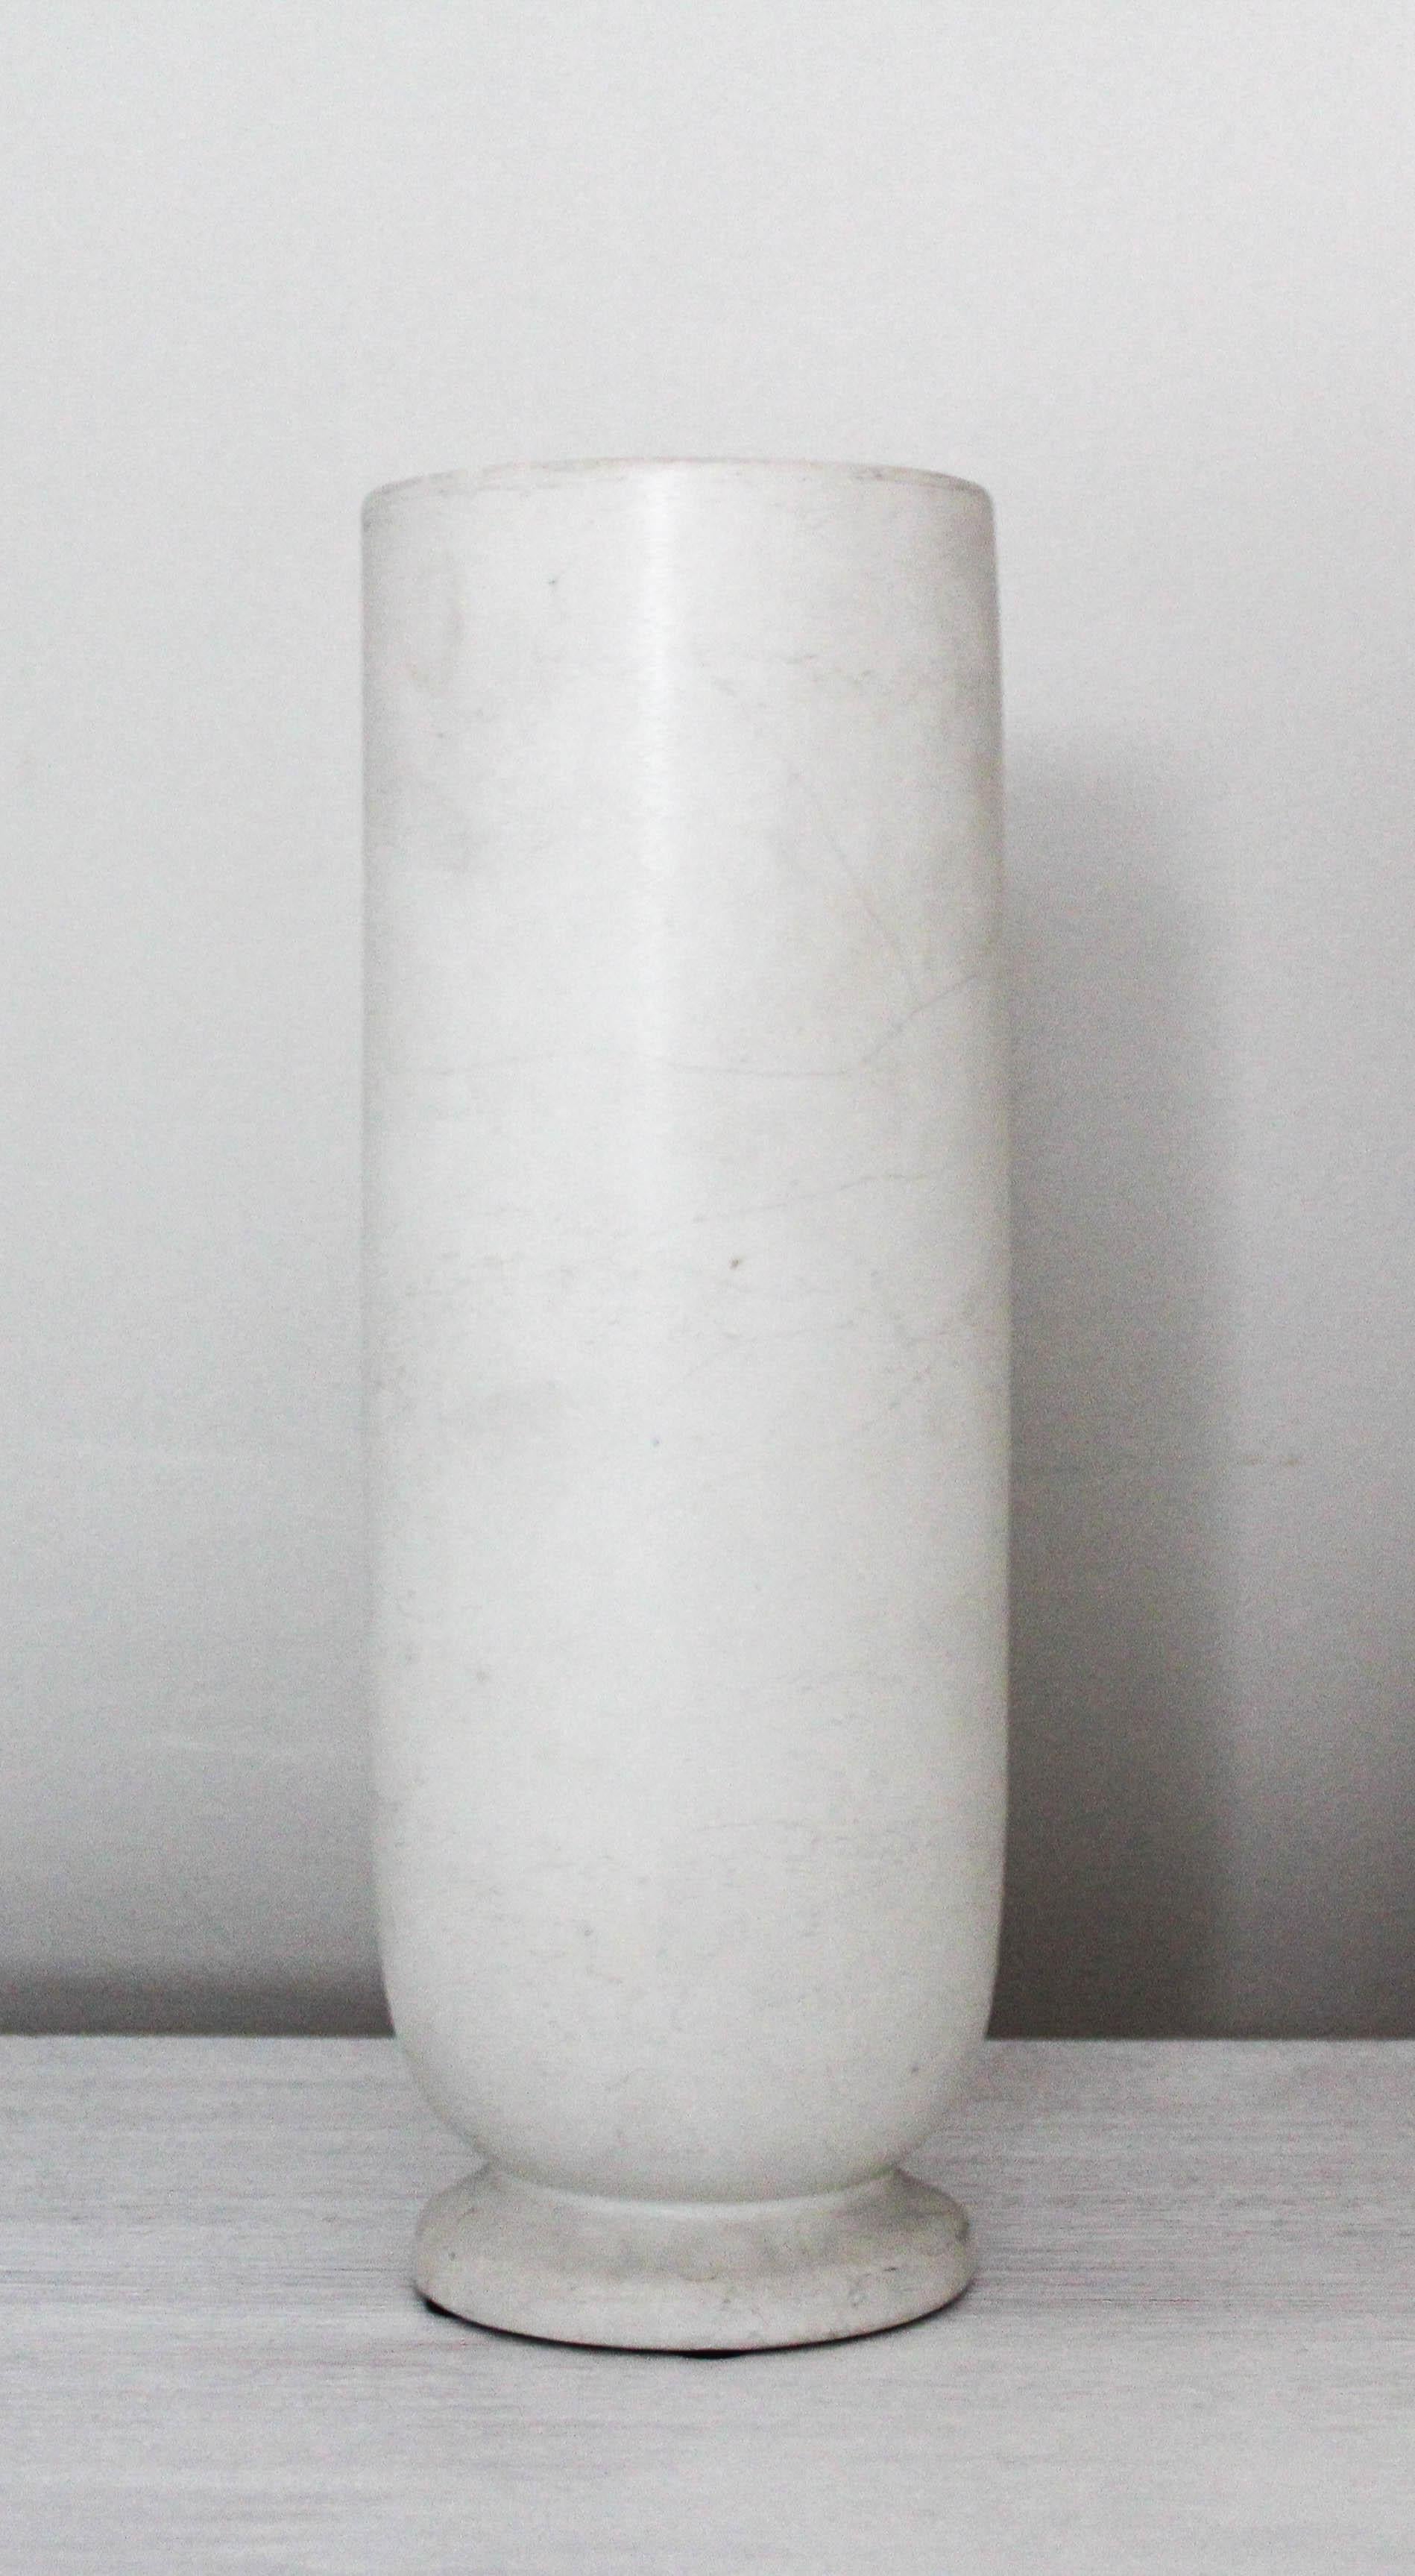 Midcentury Wilhelm Kåge ceramic vase for Gustavsberg. The model is called 